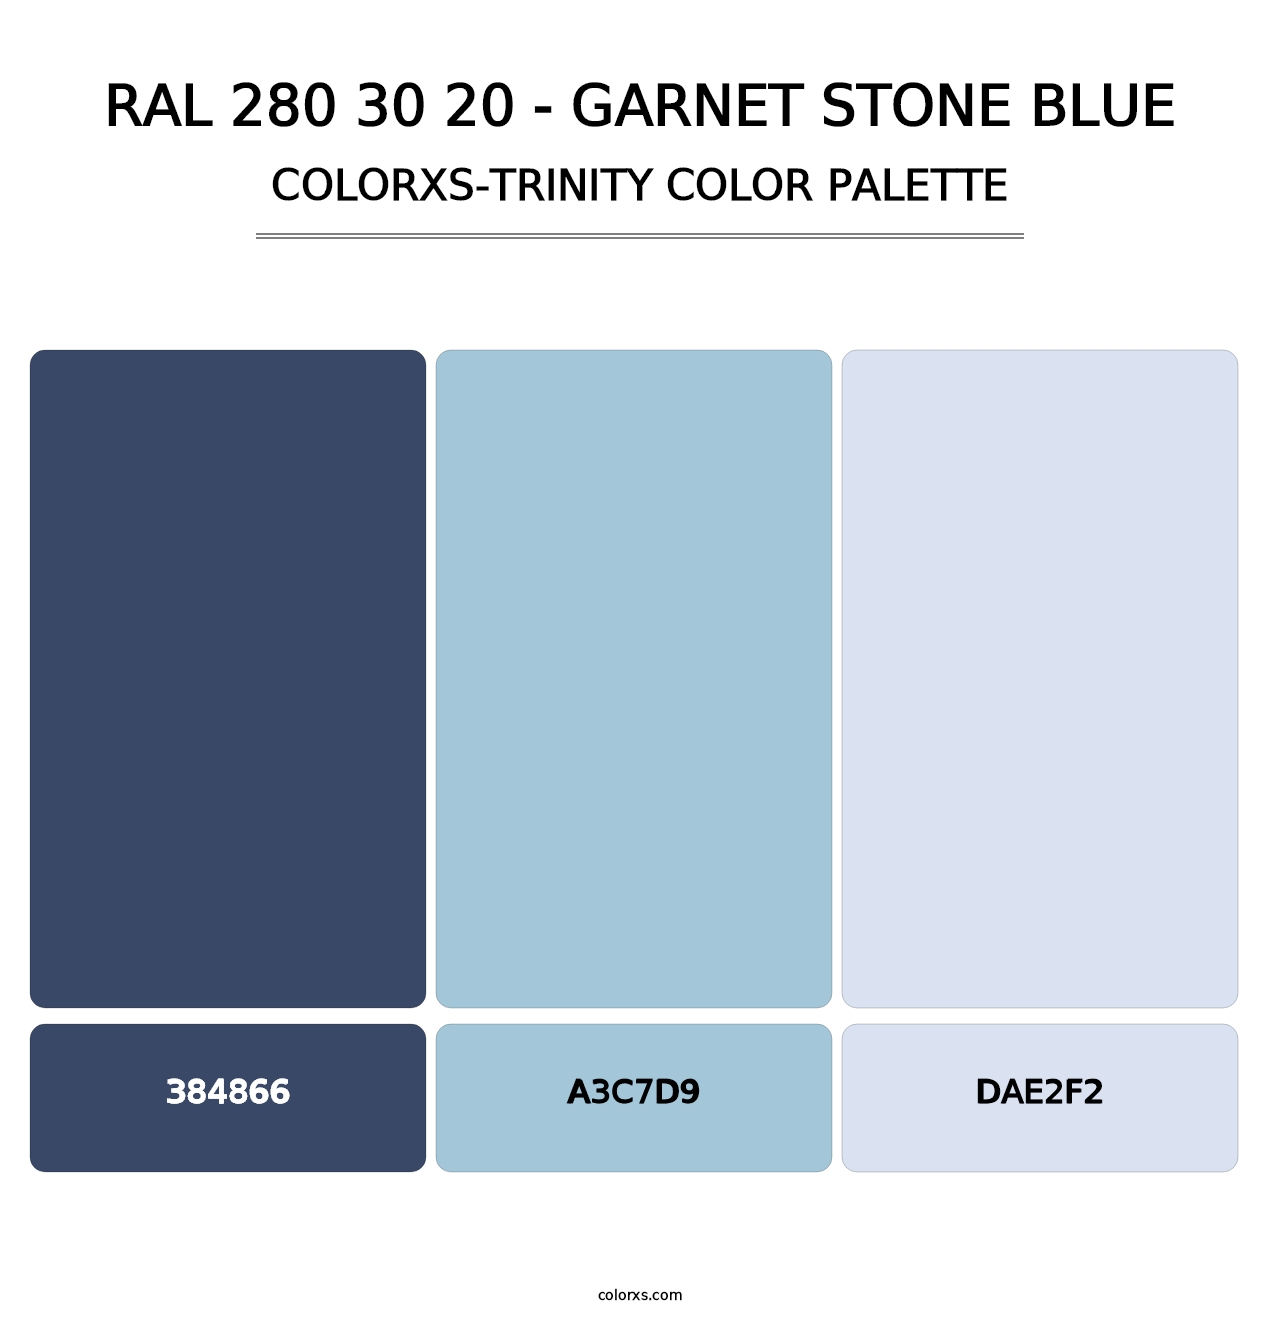 RAL 280 30 20 - Garnet Stone Blue - Colorxs Trinity Palette